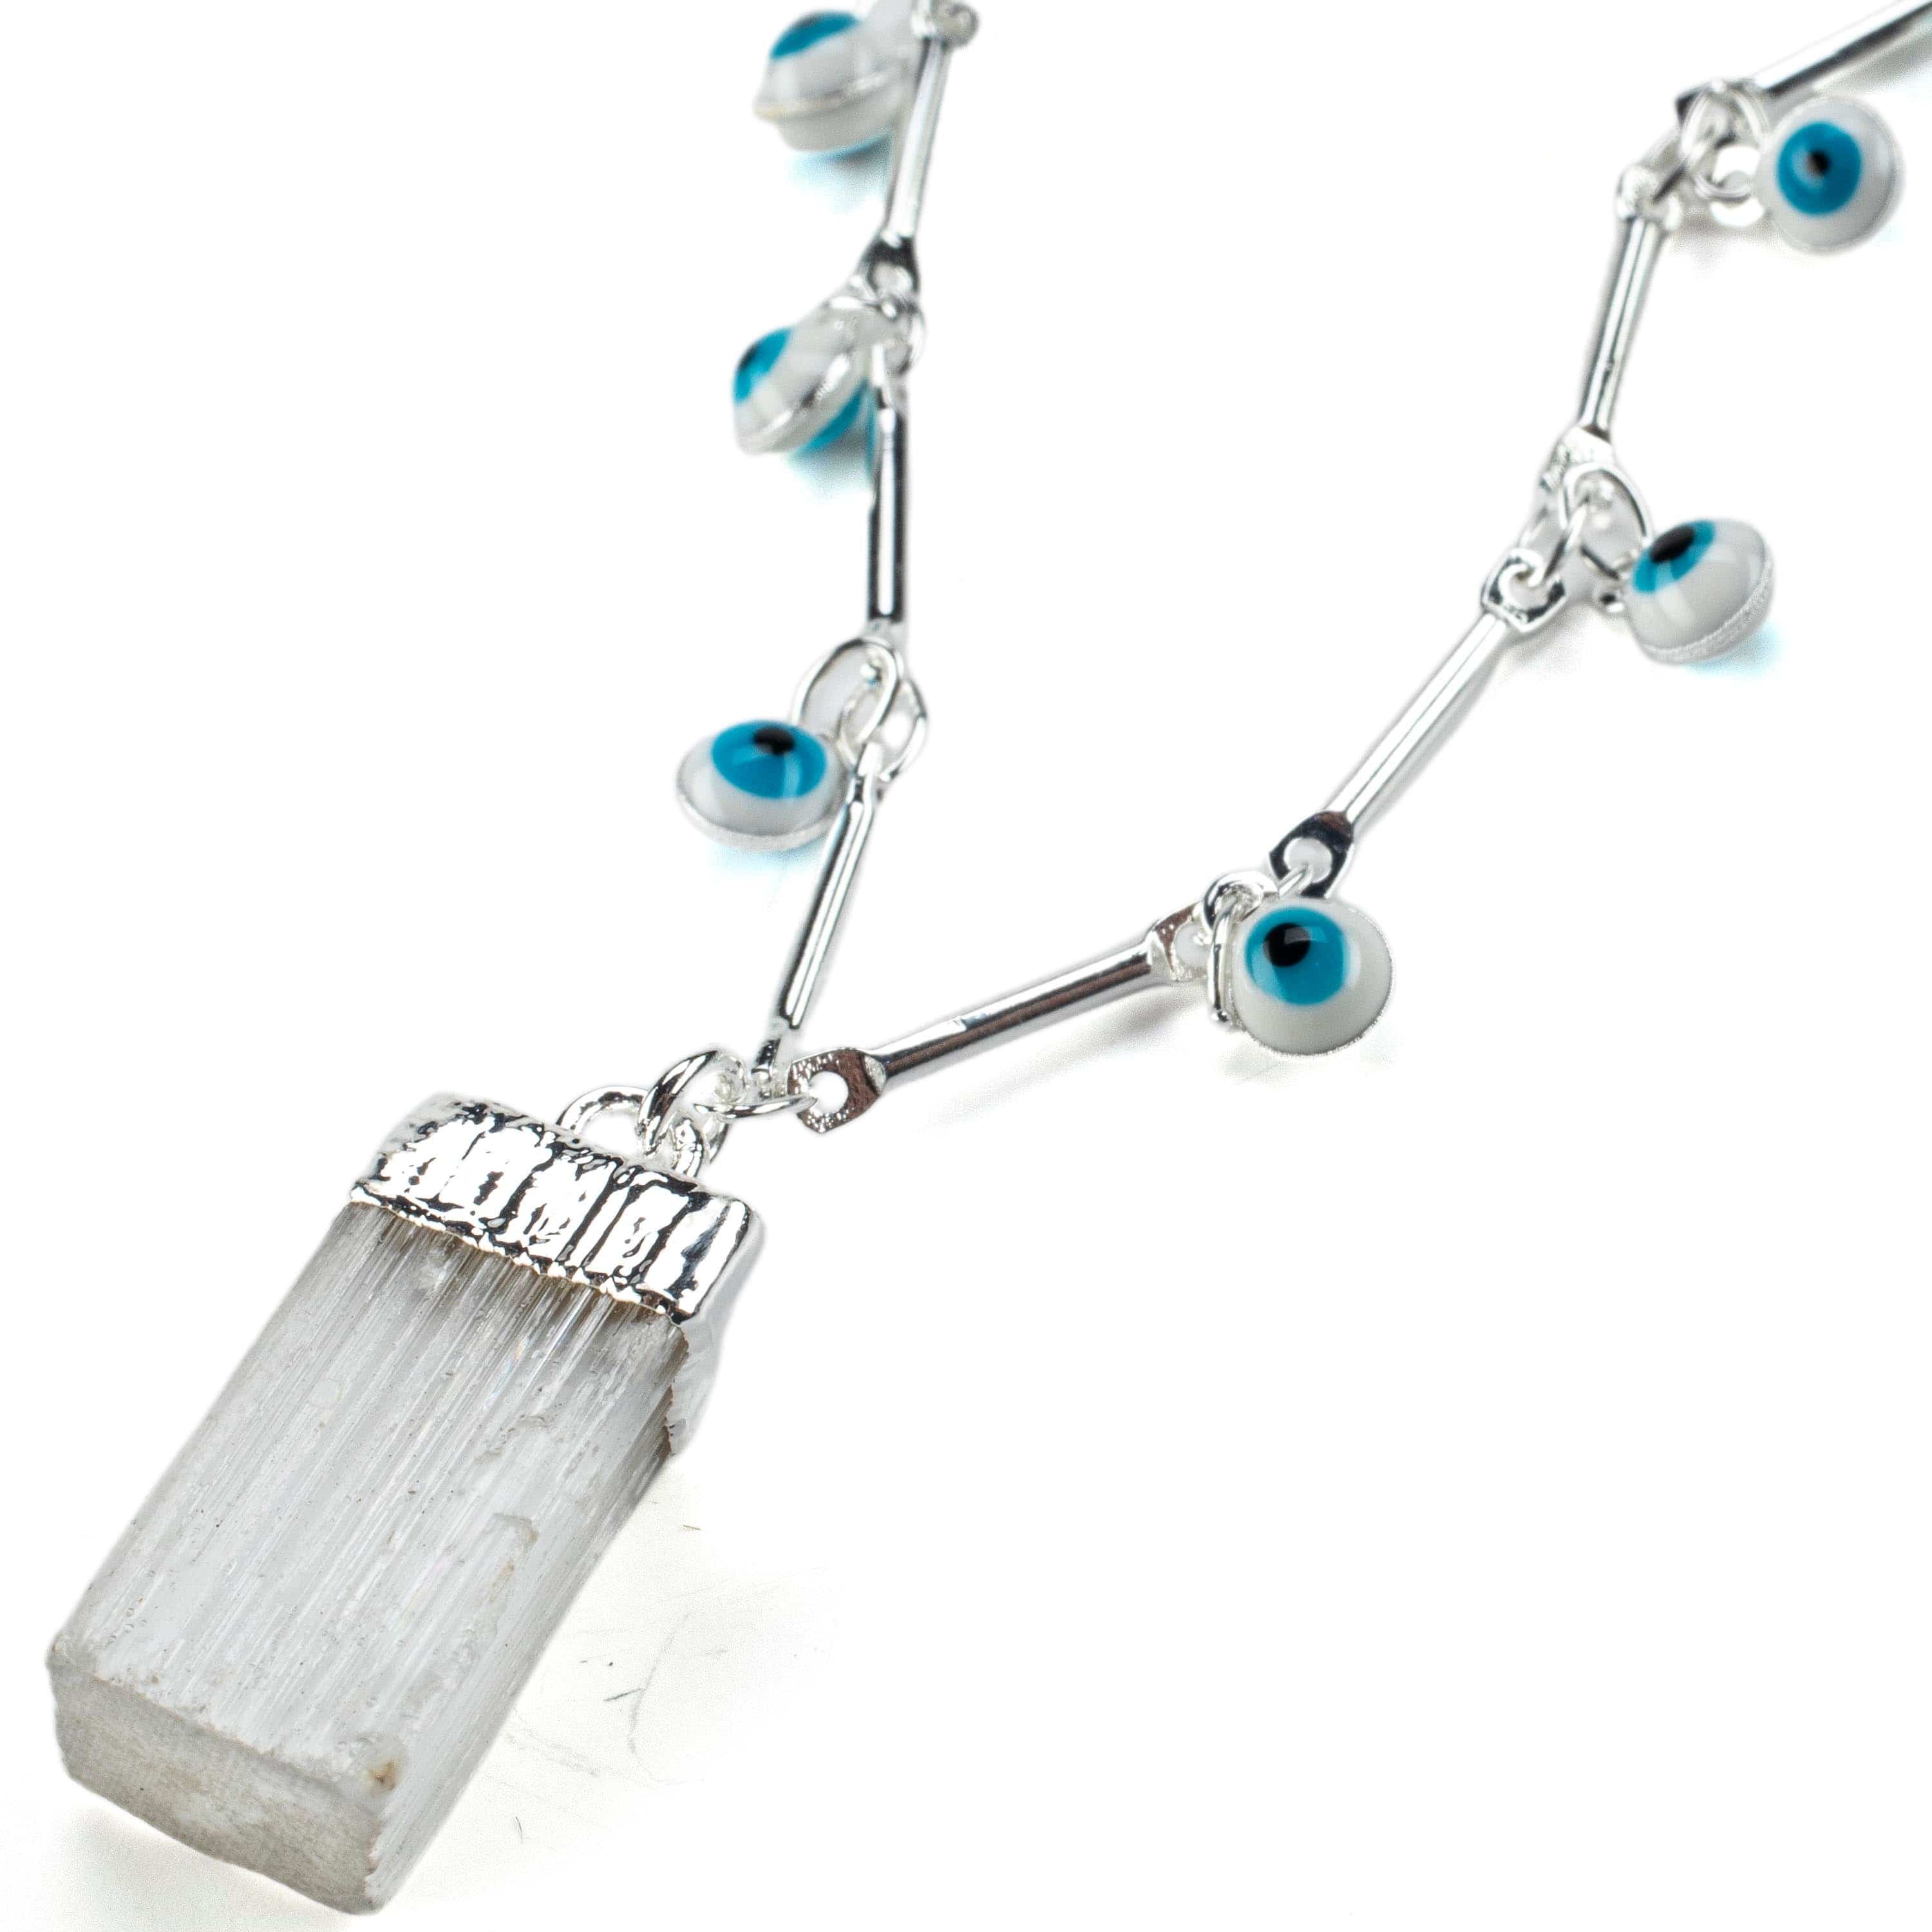 Kalifano Crystal Jewelry Evil Eye Necklace with Selenite Pendant CJN-RJ-SL